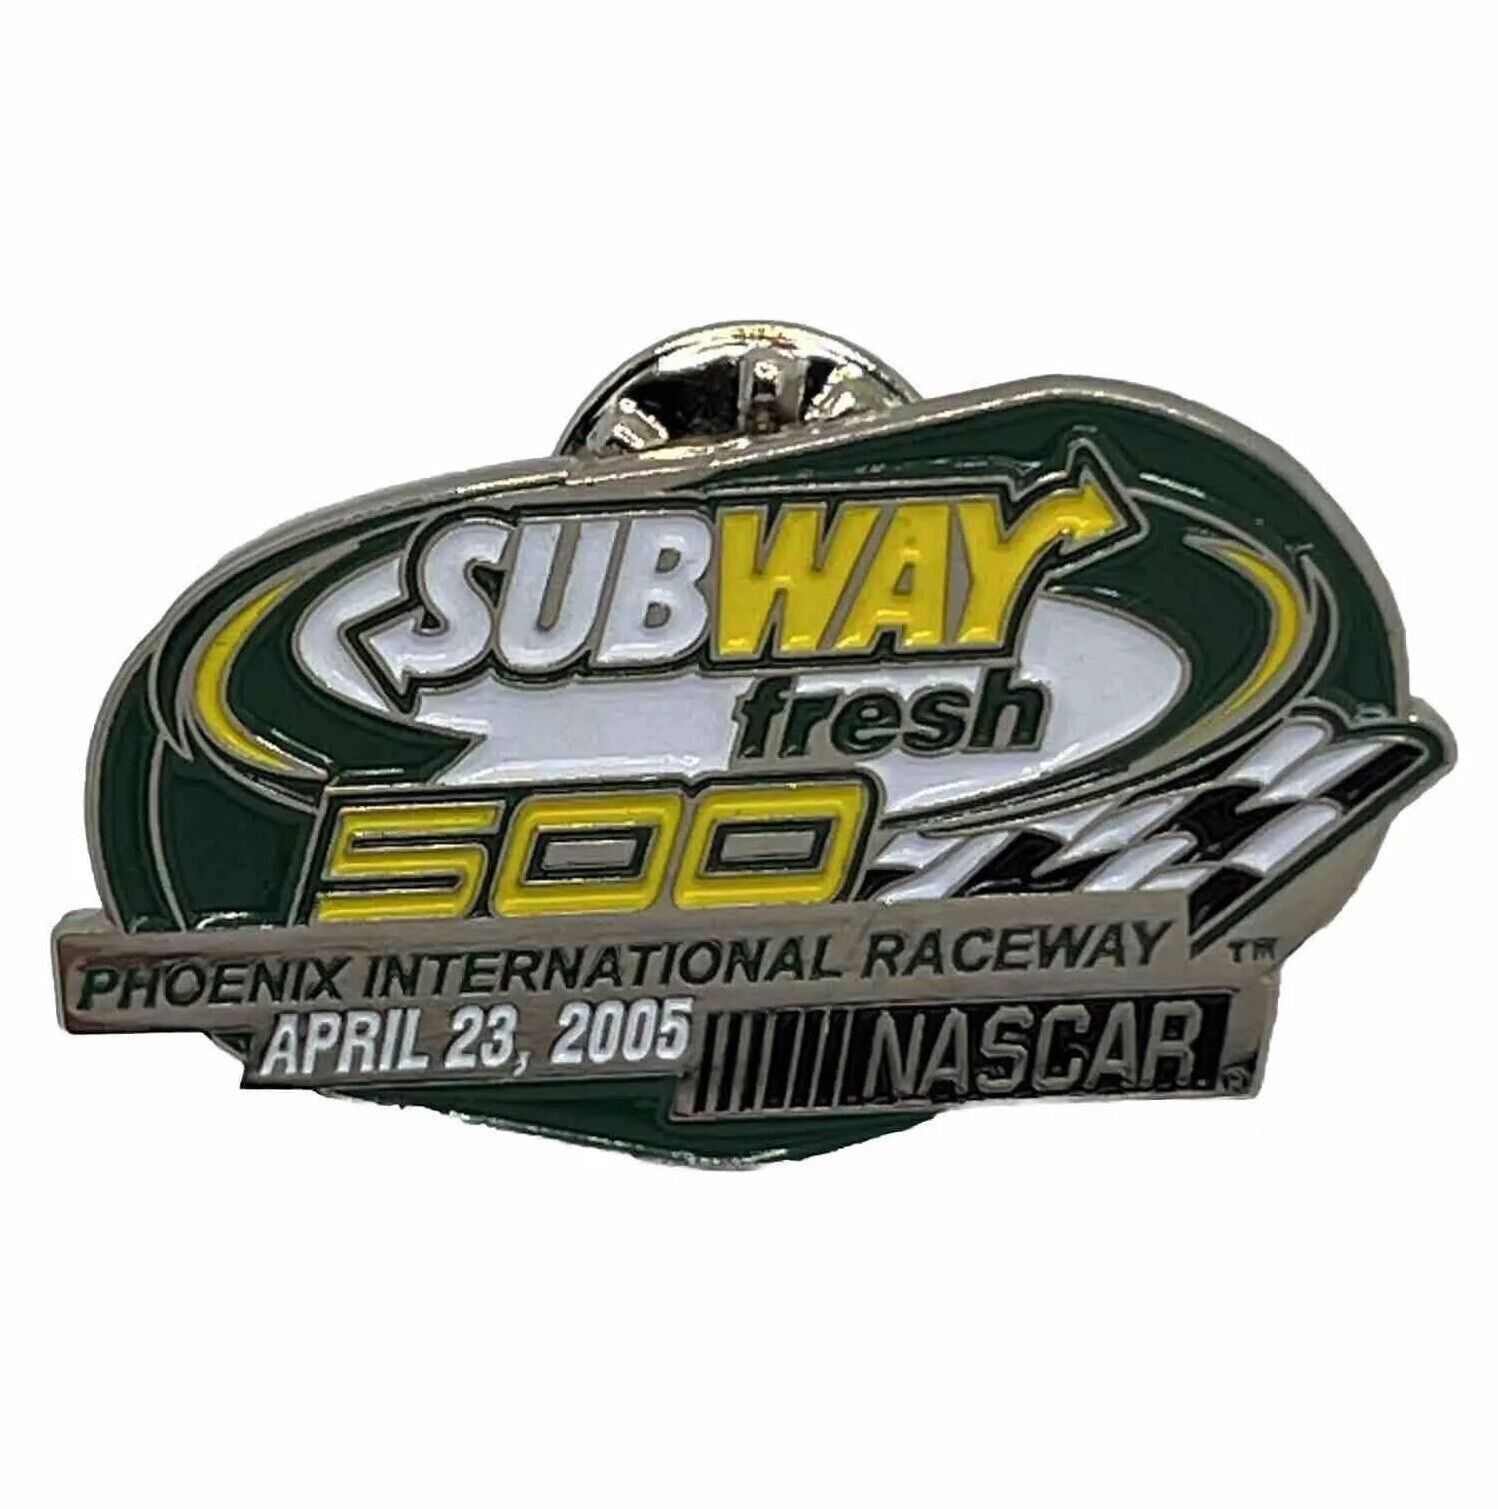 2005 Subway 500 Phoenix International Raceway NASCAR Race Enamel Lapel Hat Pin